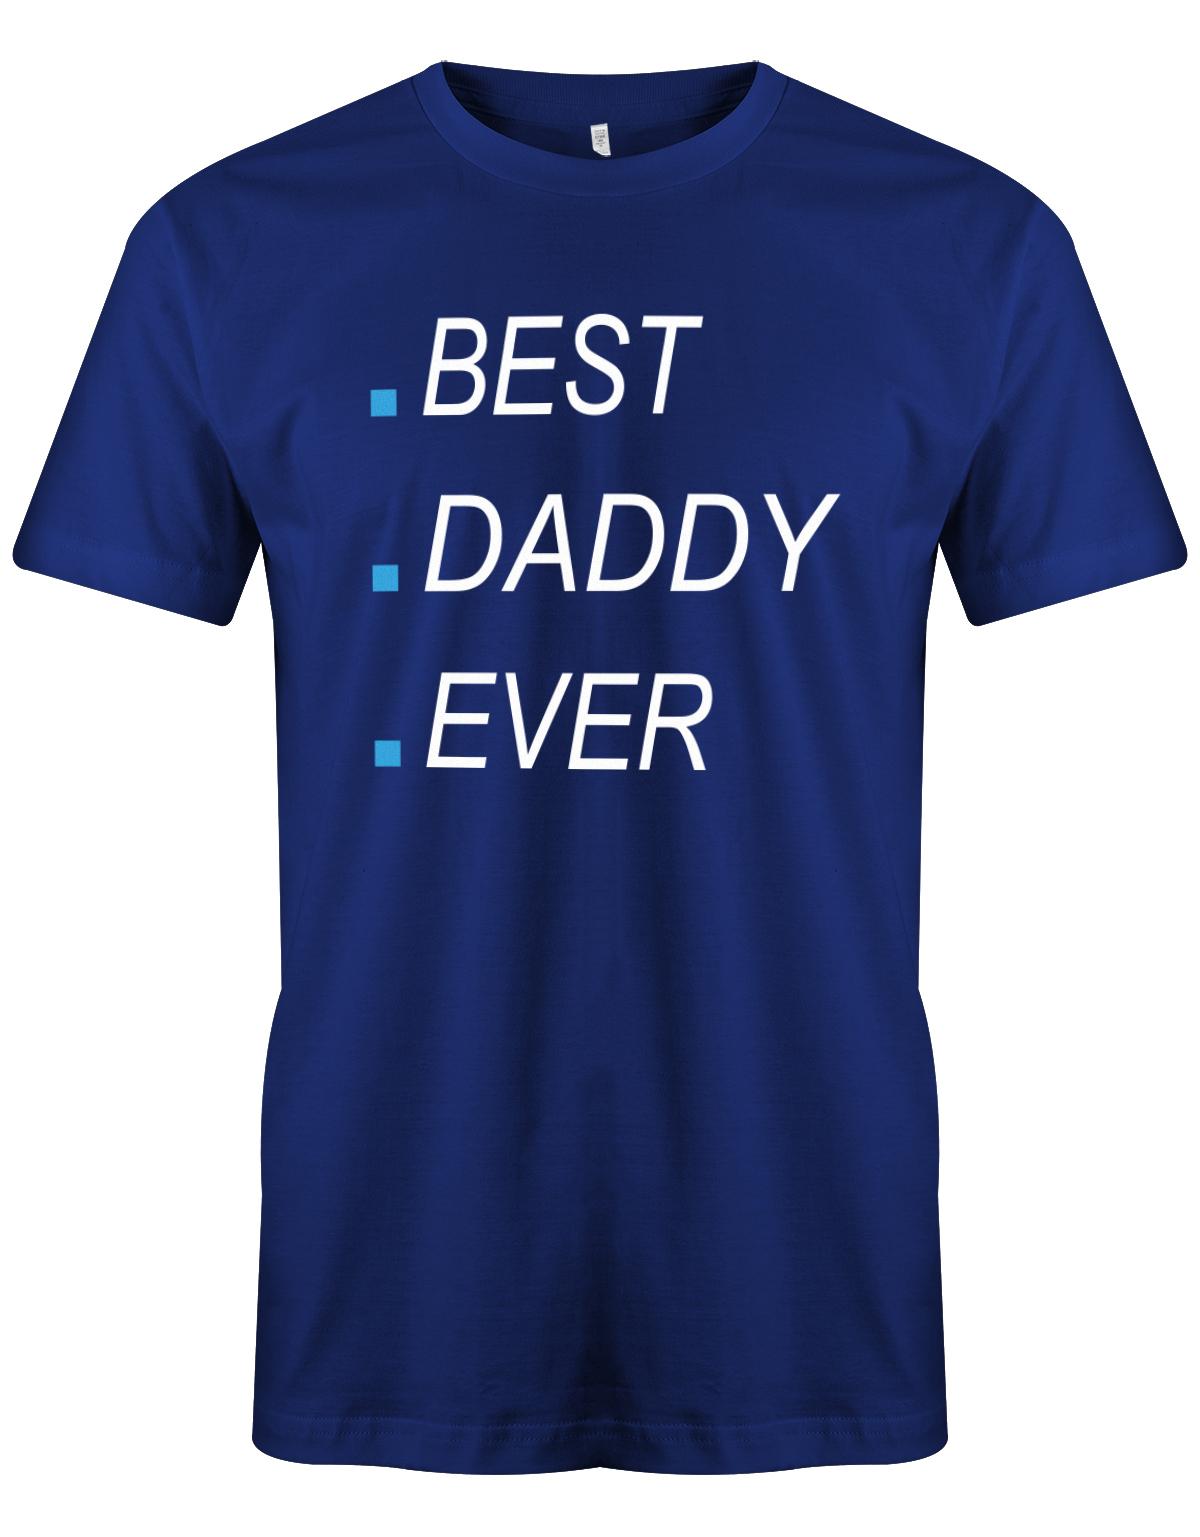 Best-Daddy-ever-Herren-papa-Shirt-Royalblau